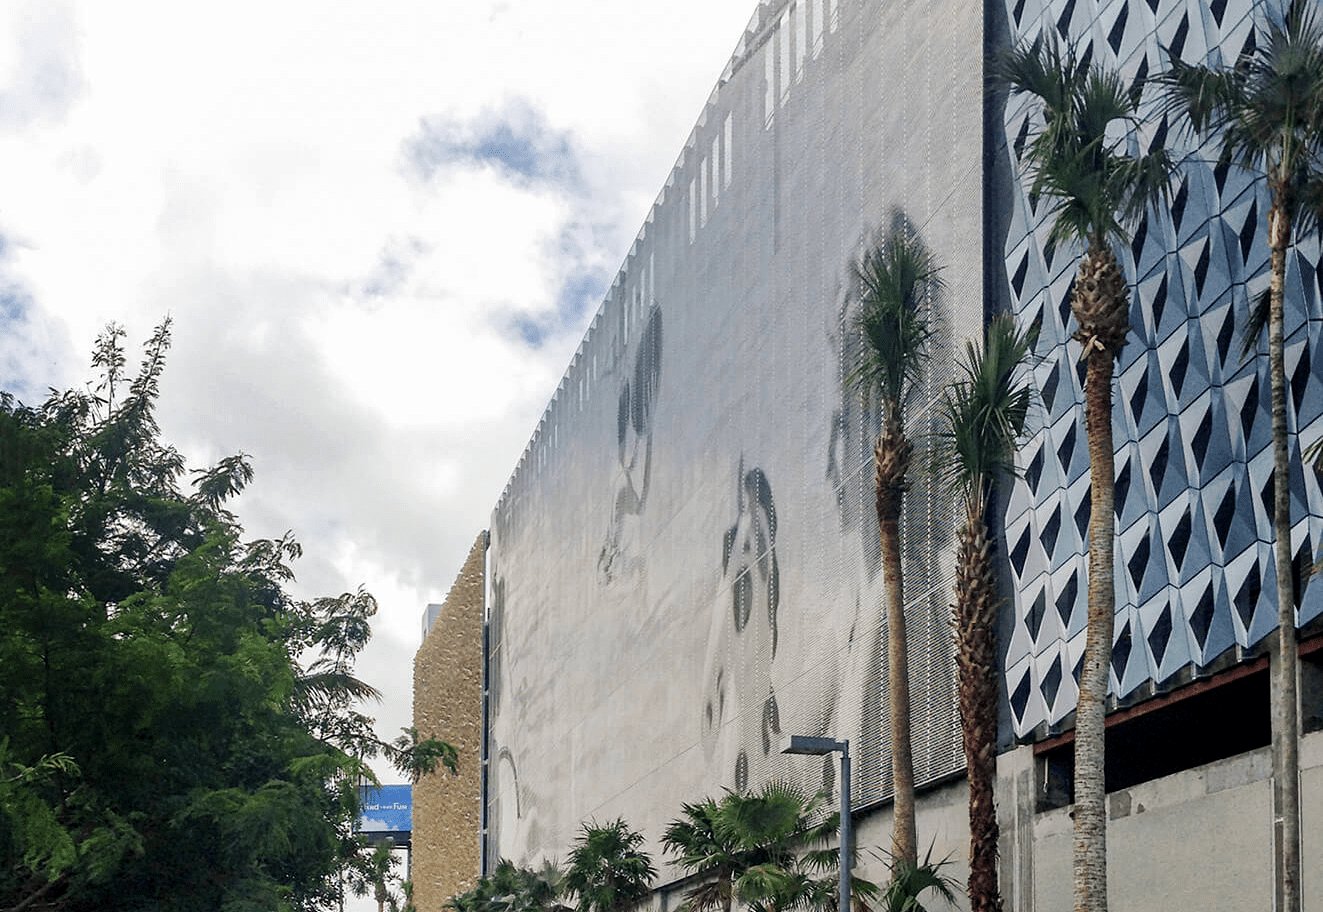 City View Garage facade designed by artist John Baldessari using Zahner Angel Hair® Stainless Steel.